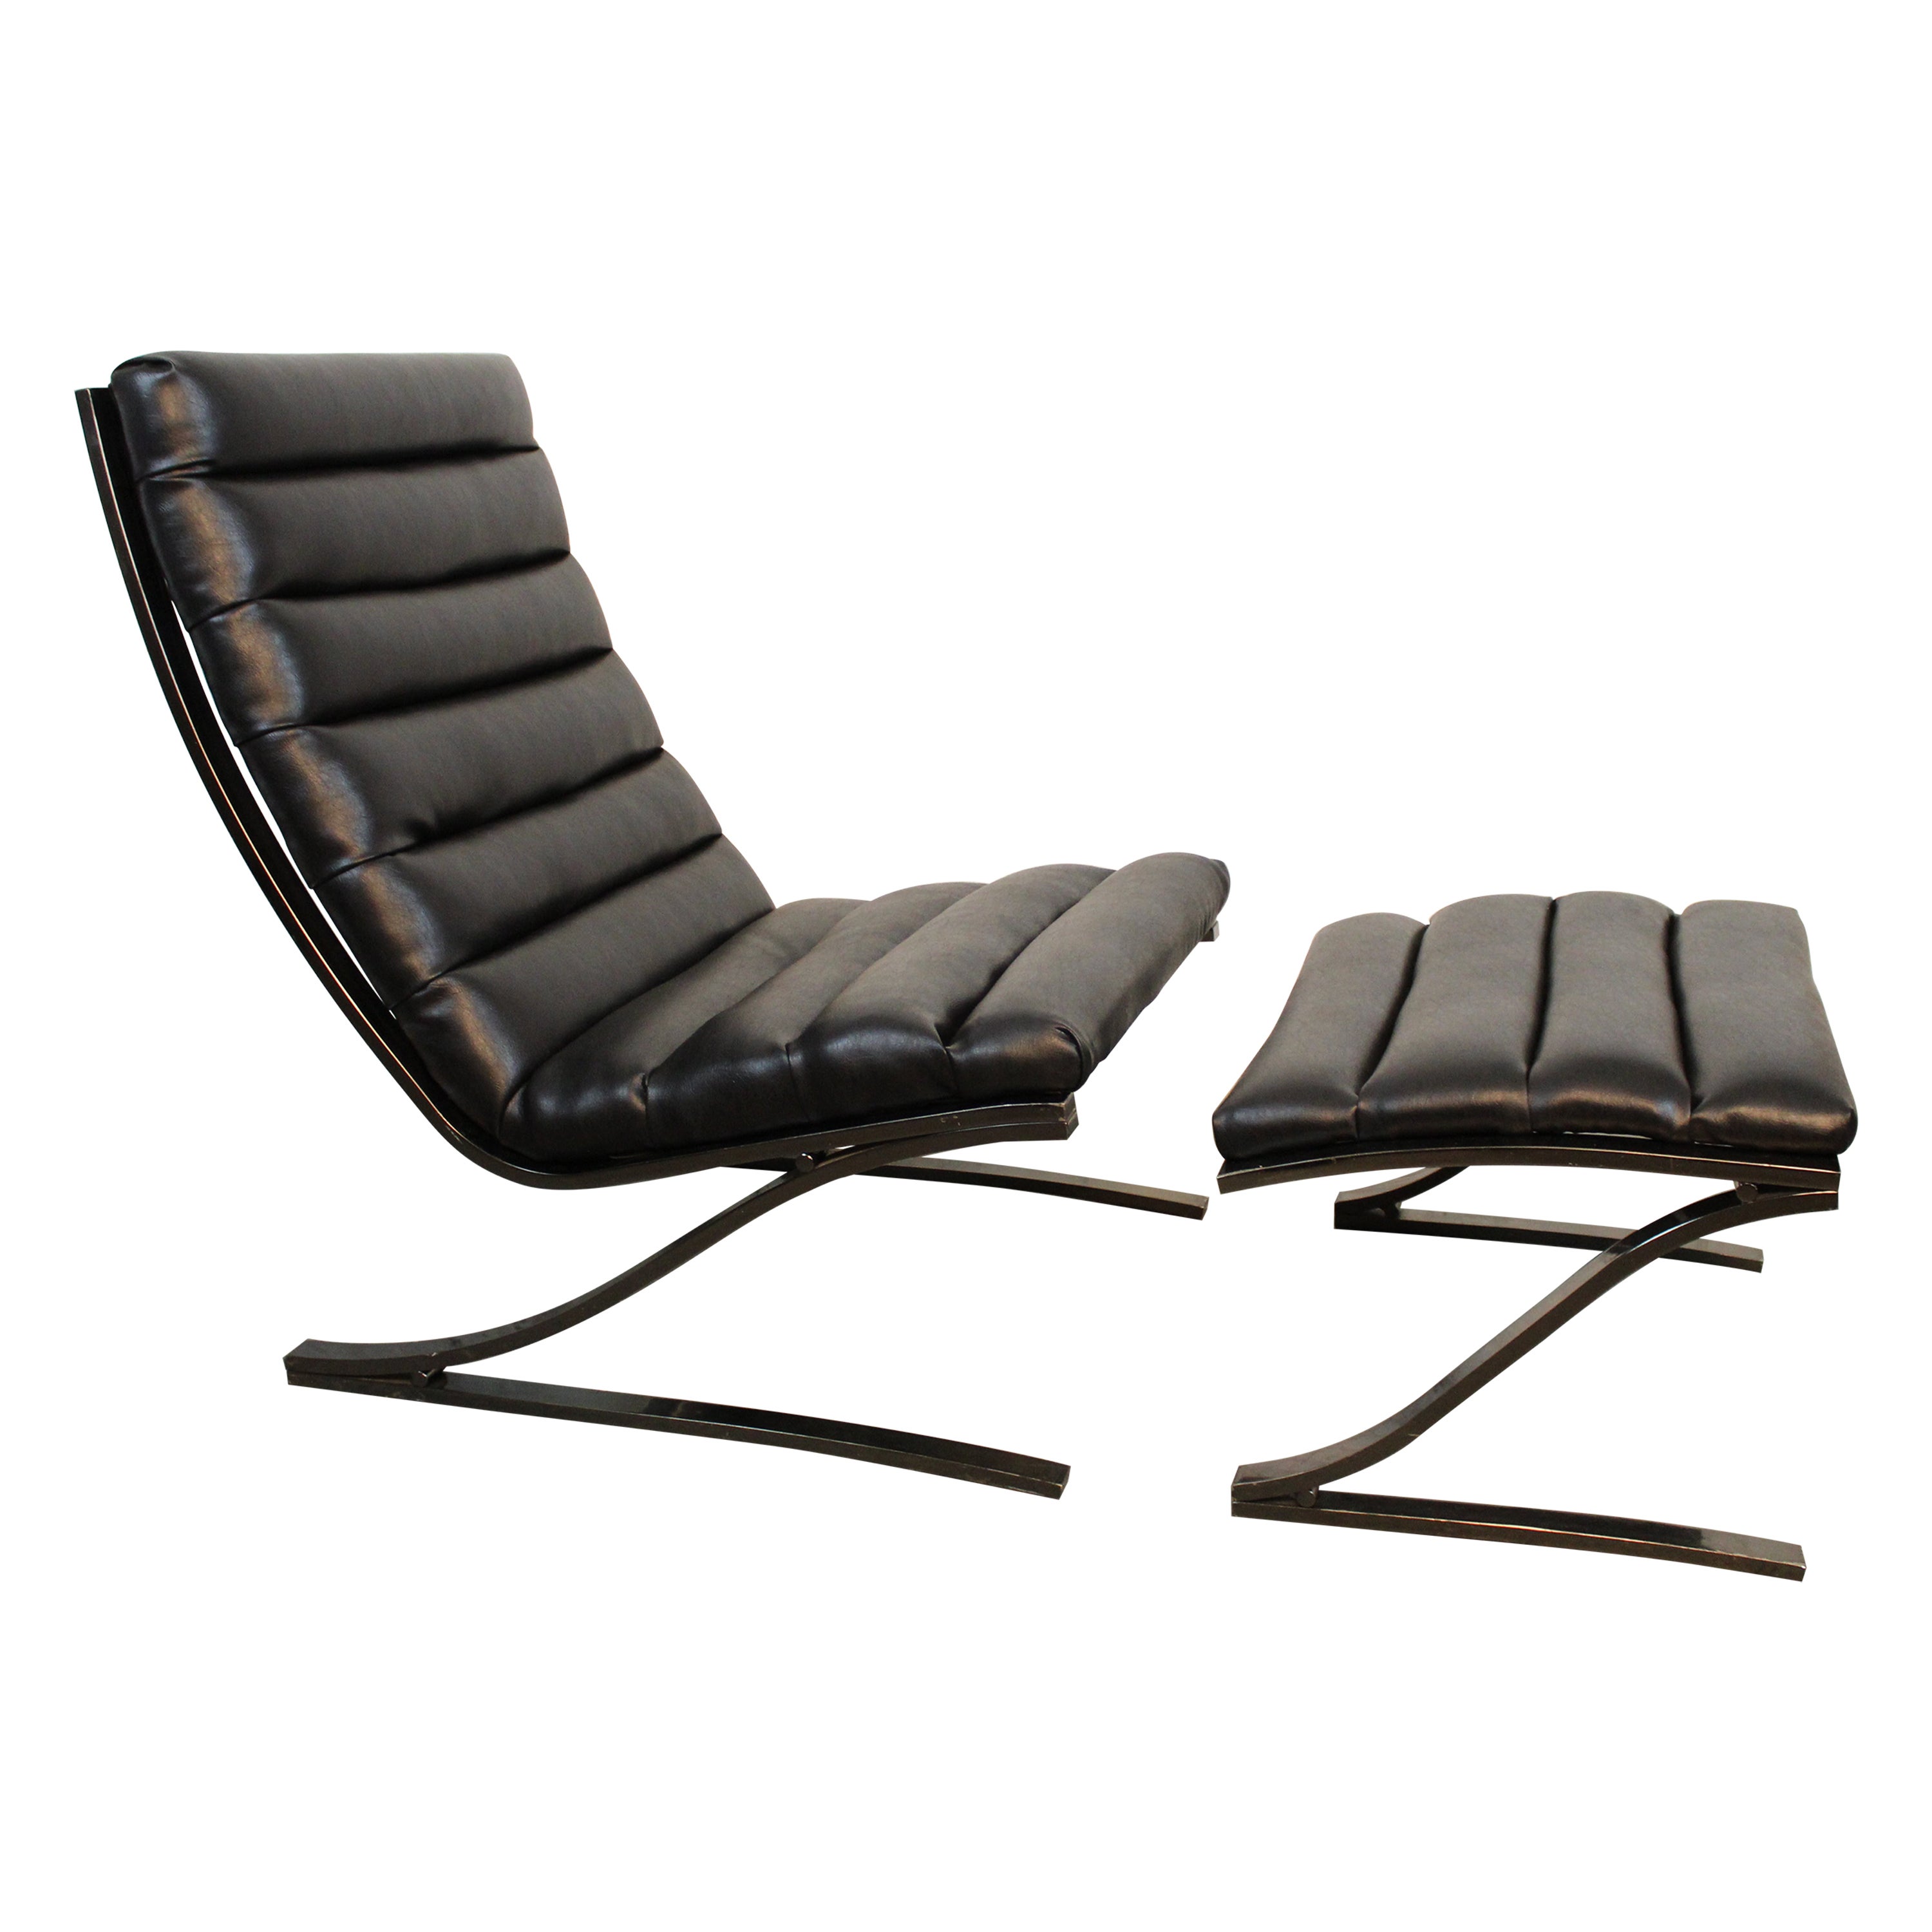 Design Institute America Lounge Chairs